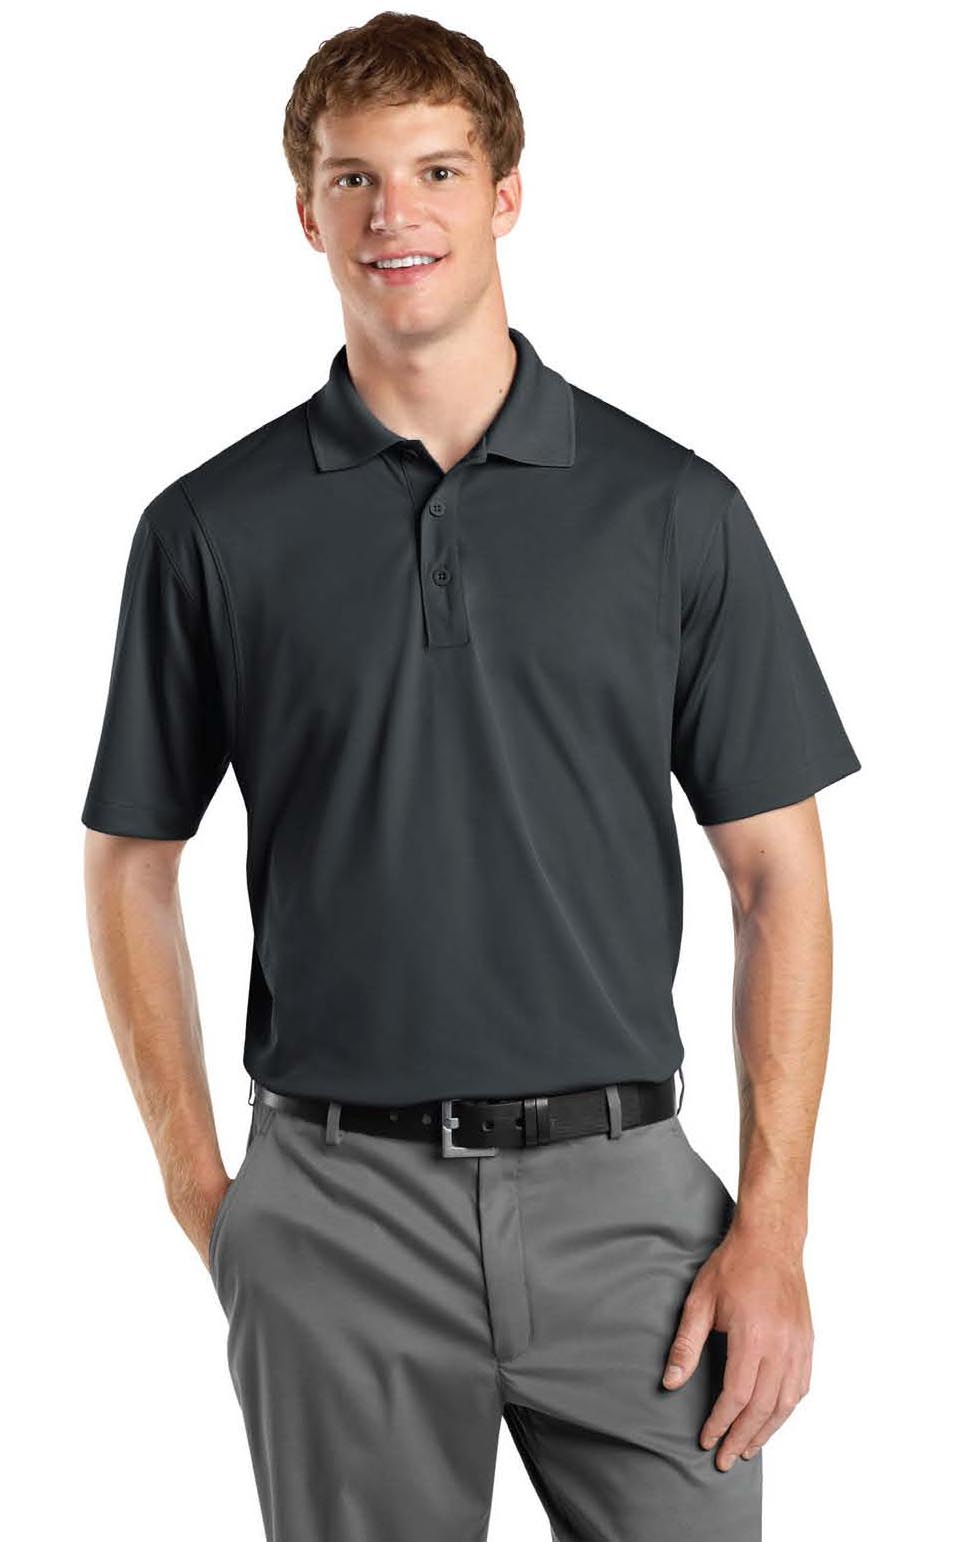 Casual Apparel Polo Shirt | Apparel Services Network